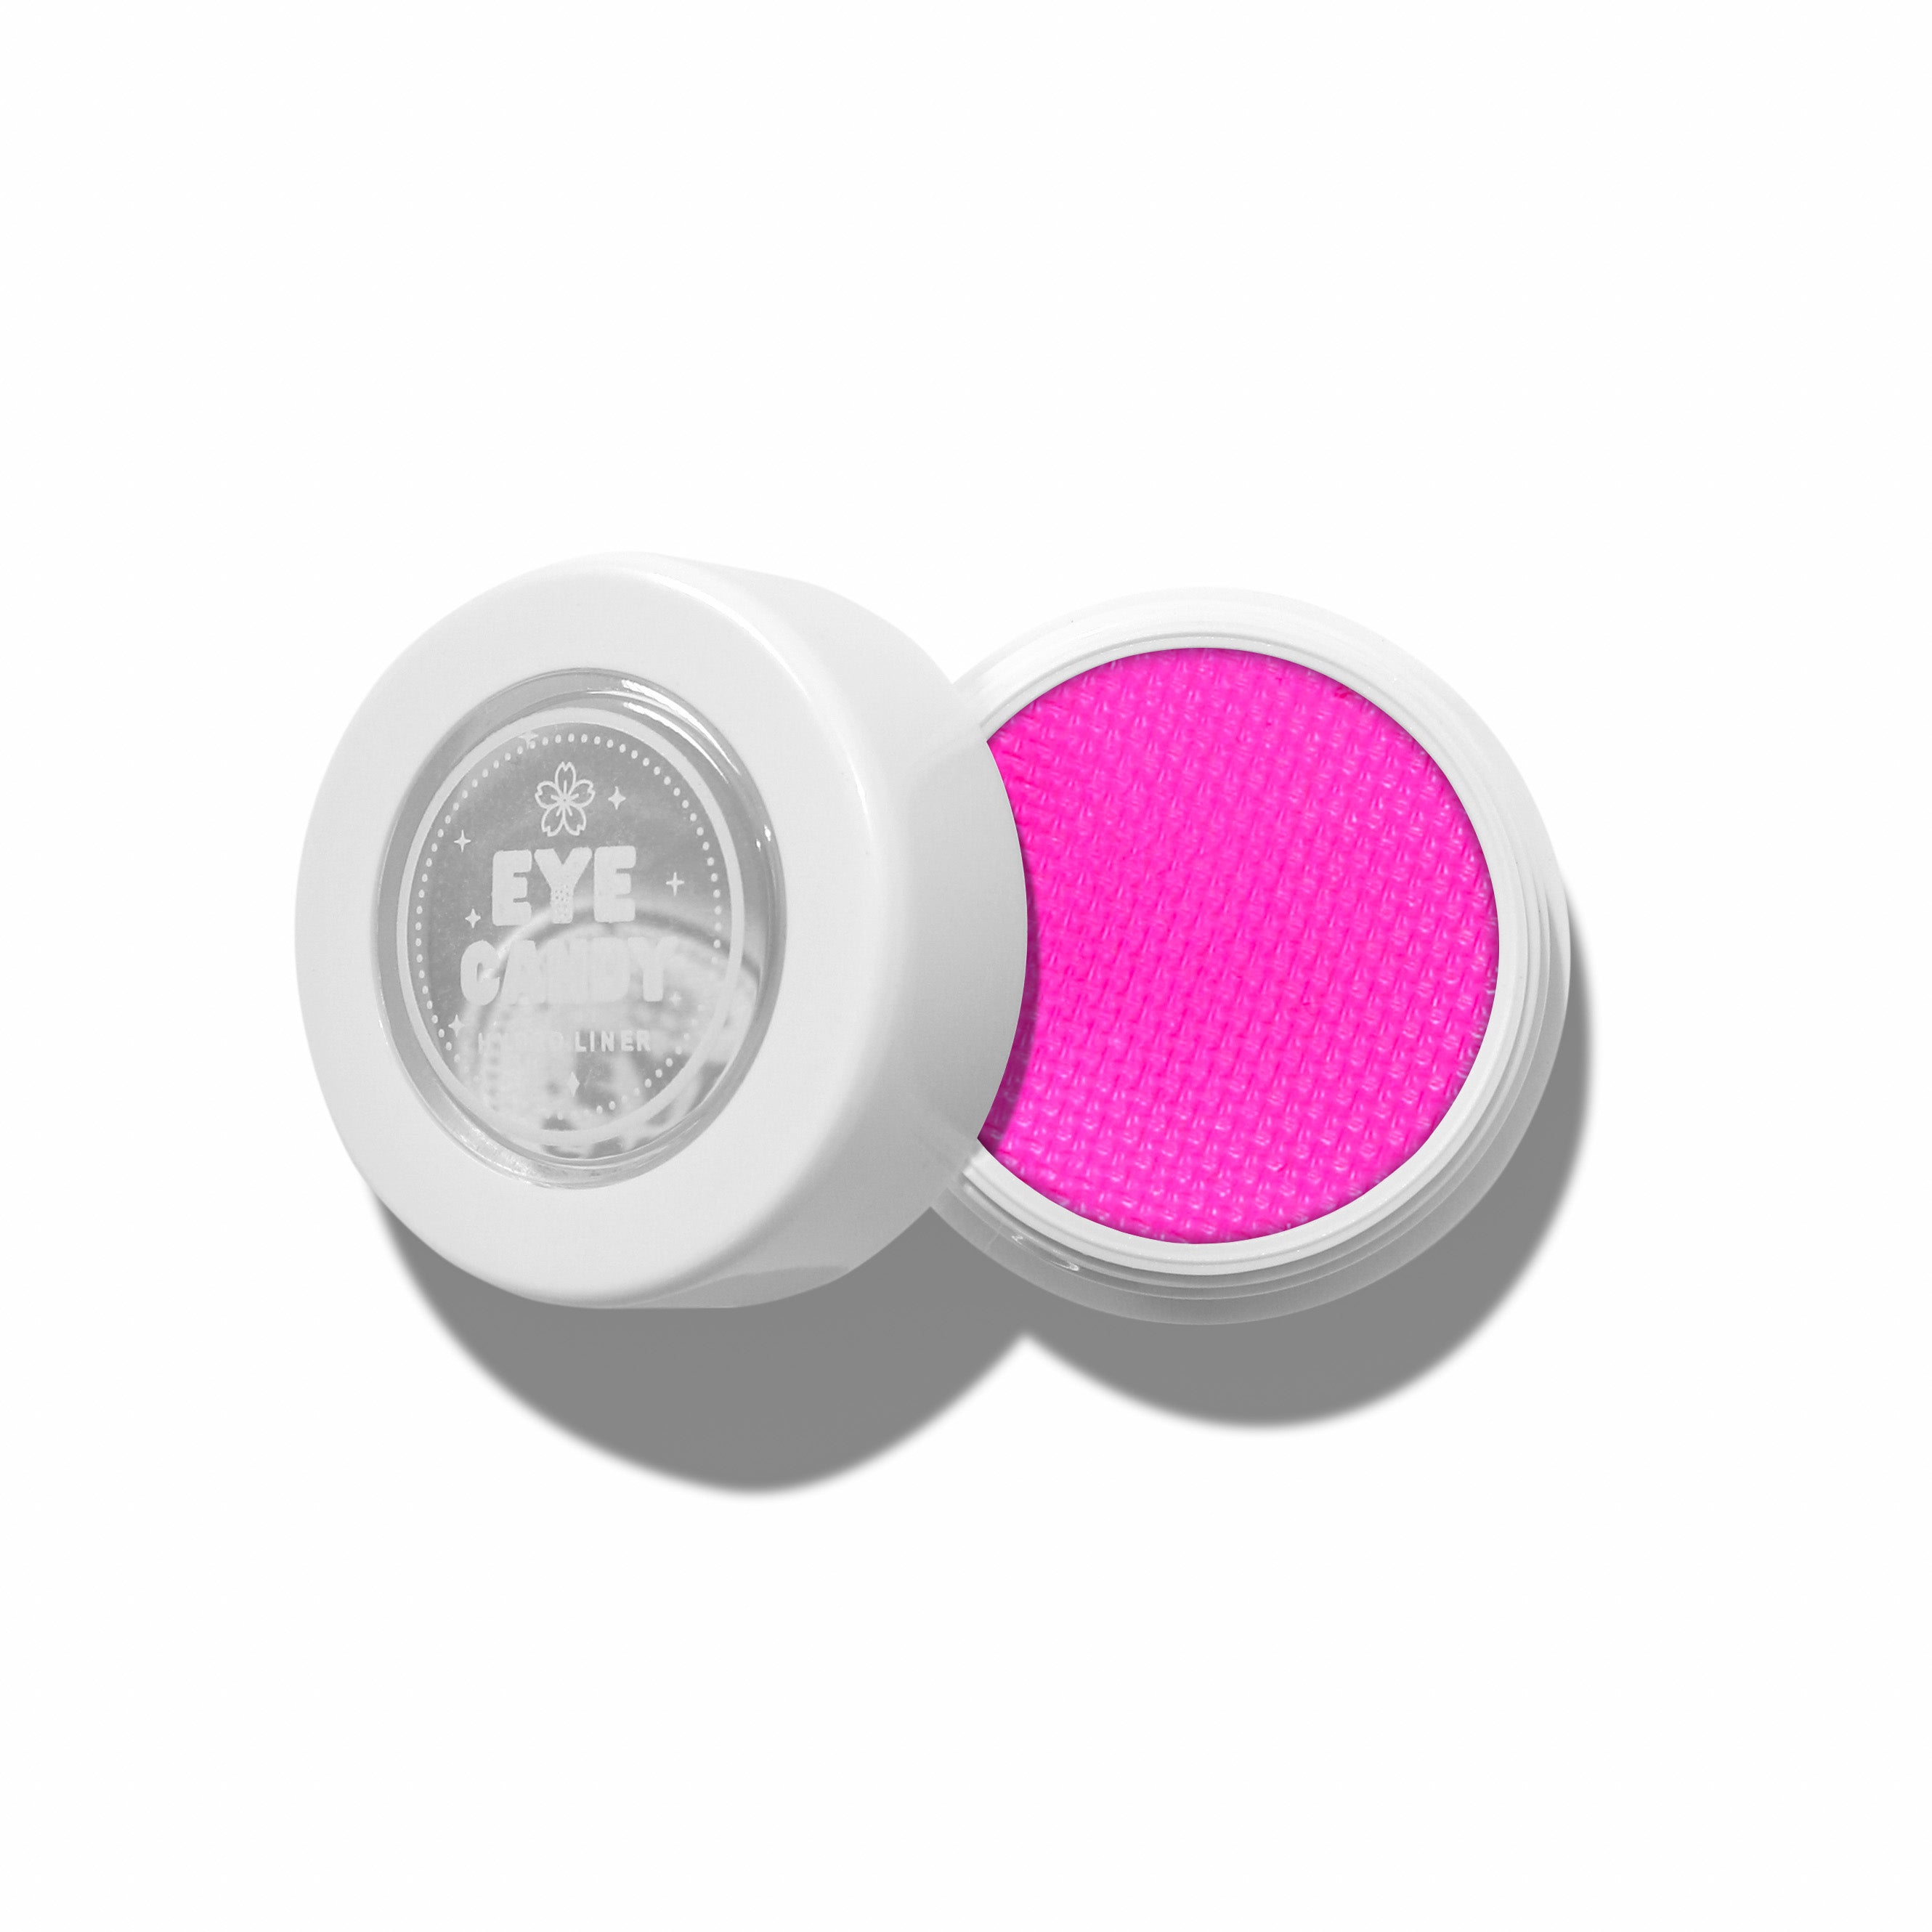 hot pink water activated eyeliner, pink eyeliner, pink hydro liner, pink graphic liner, pink eyeliner, yvaexpressions, pink eye makeup, pink makeup